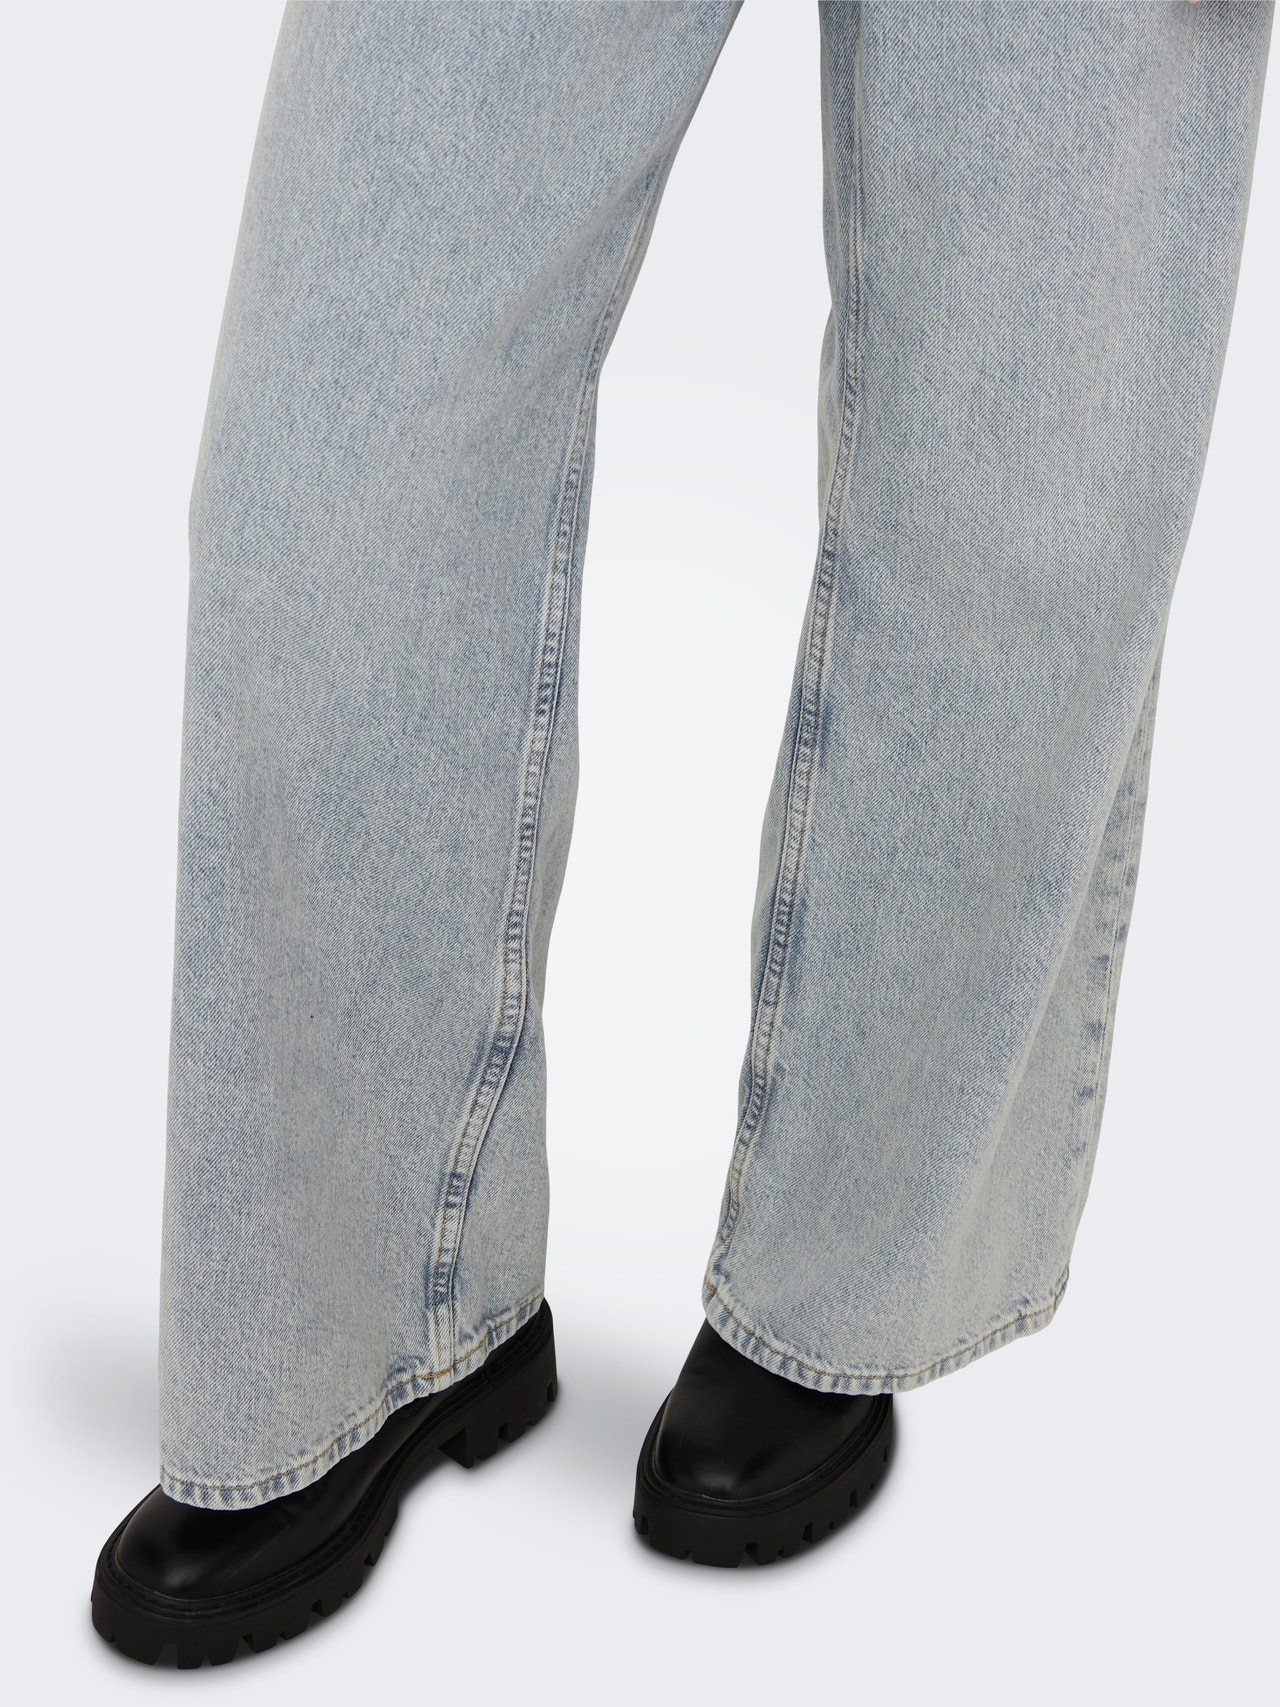 ONLY Wide leg fit Low waist Jeans -Light Blue Denim - 15296977